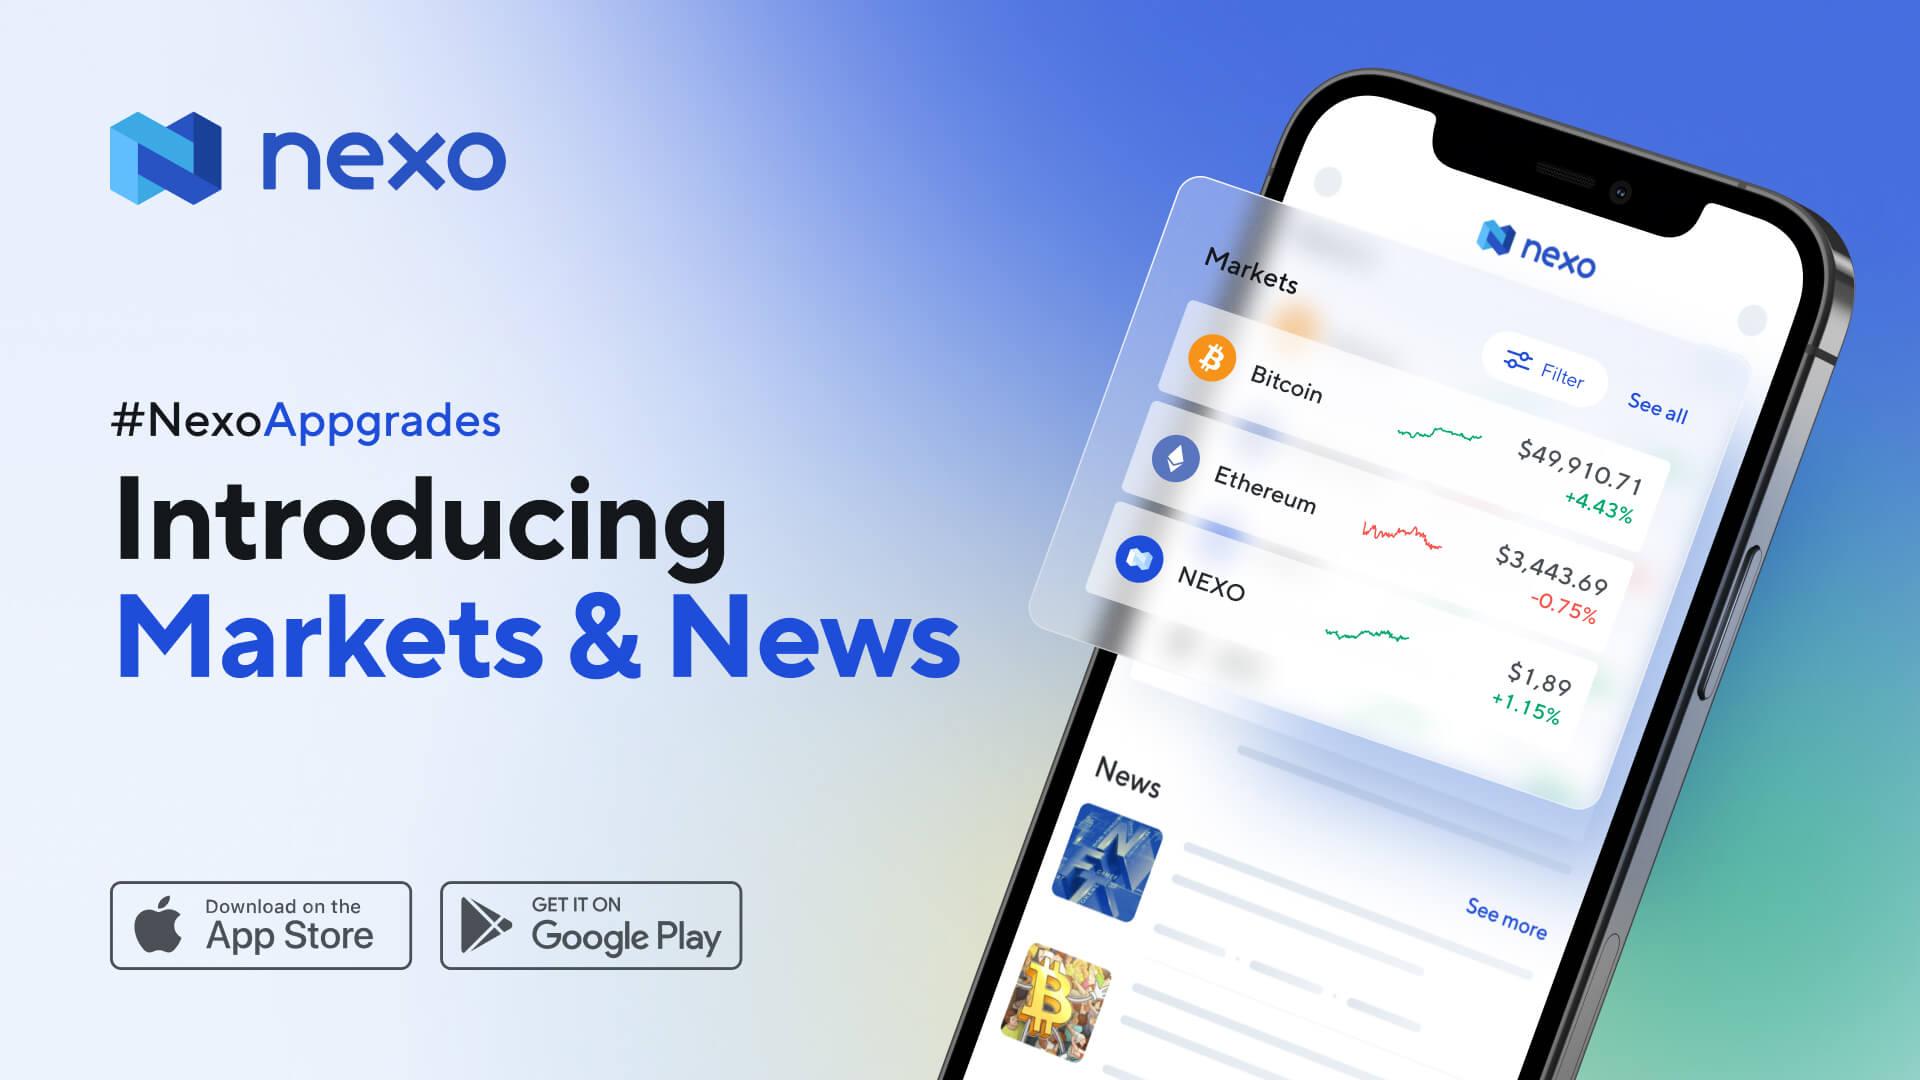 NexoアプリでMarketsとNewsが利用可能になりました！